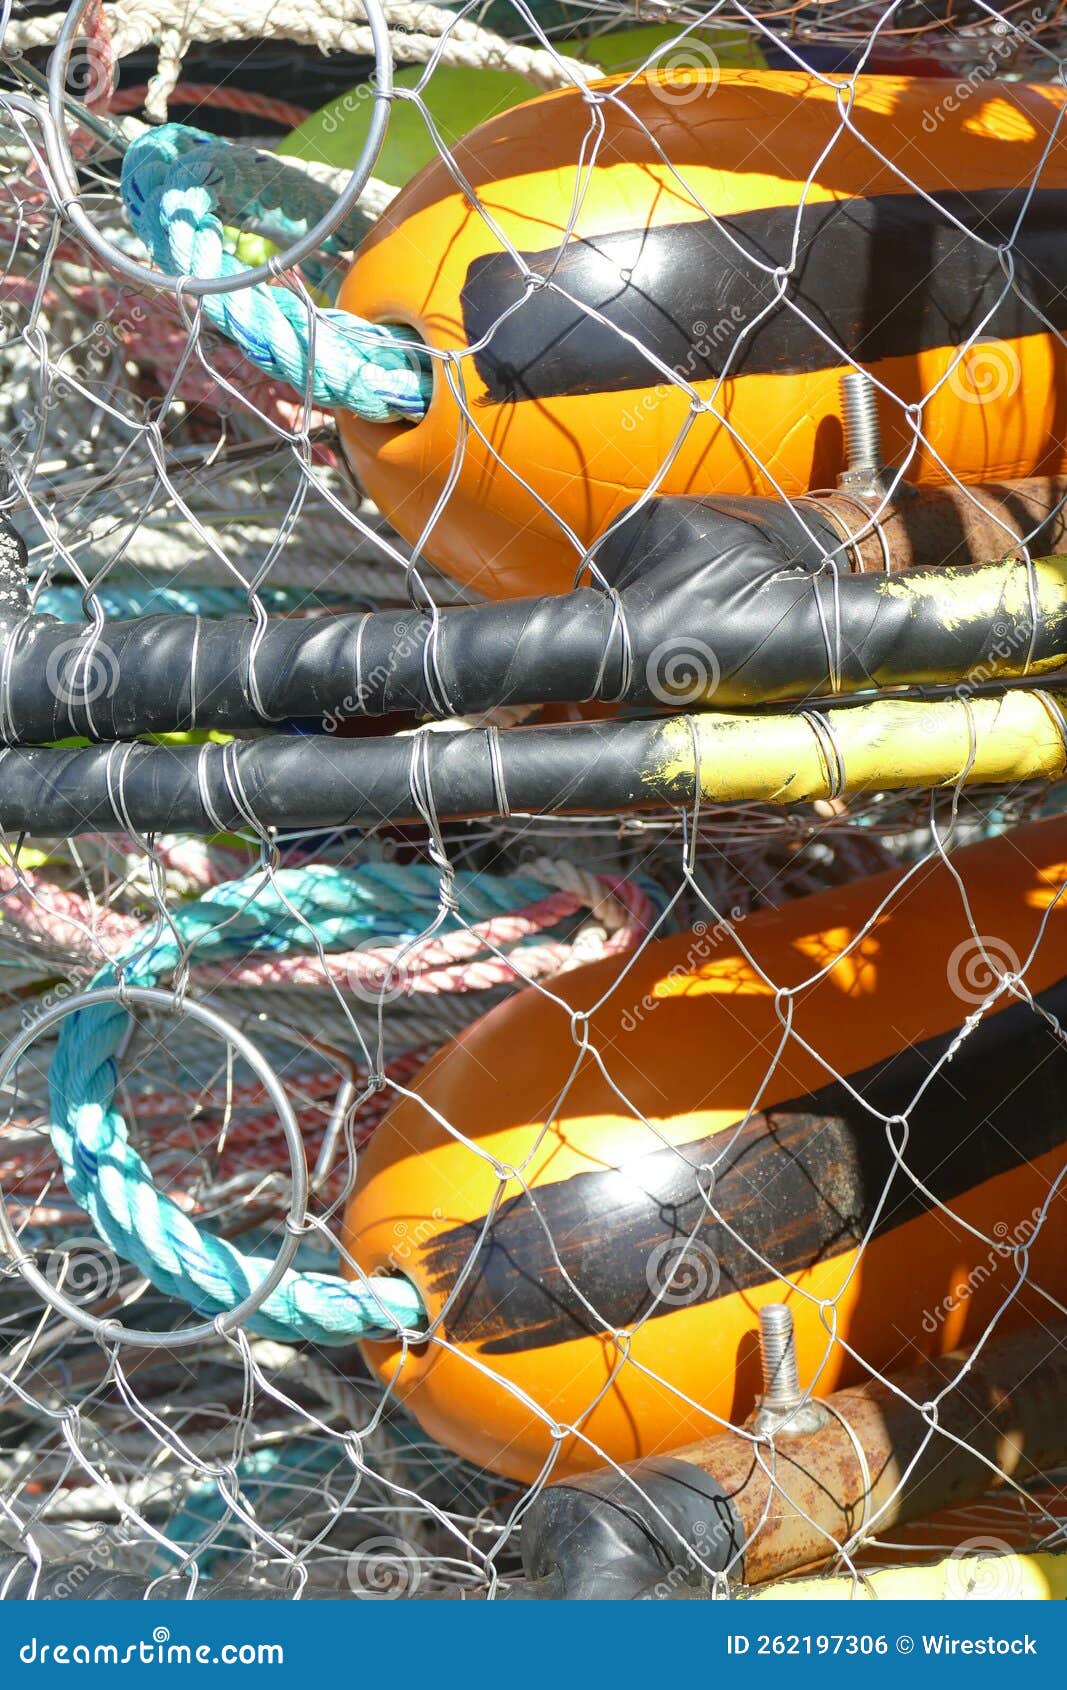 Closeup Shot of Crab Trap Floats and Buoys Stock Photo - Image of